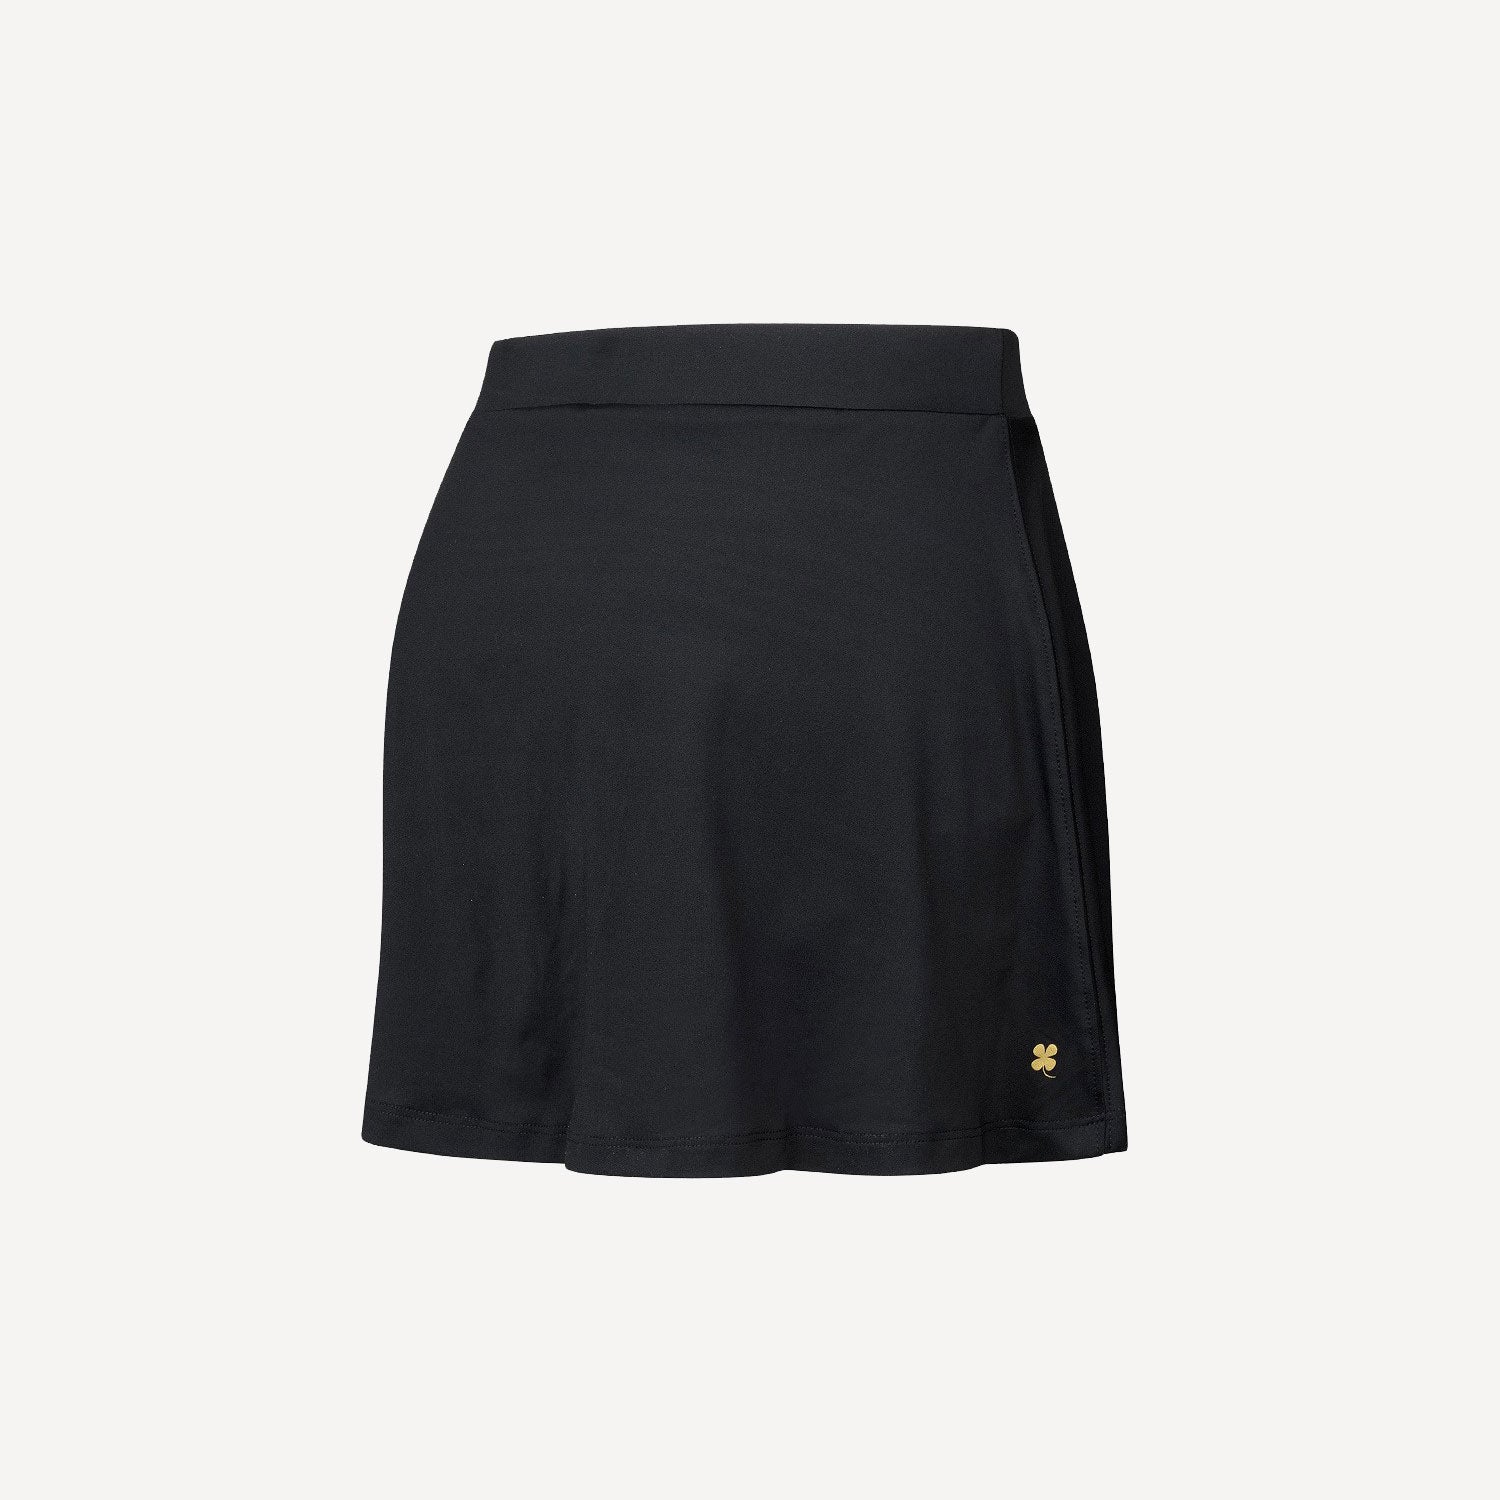 Robey Ralley Women's Tennis Skirt - Black (2)